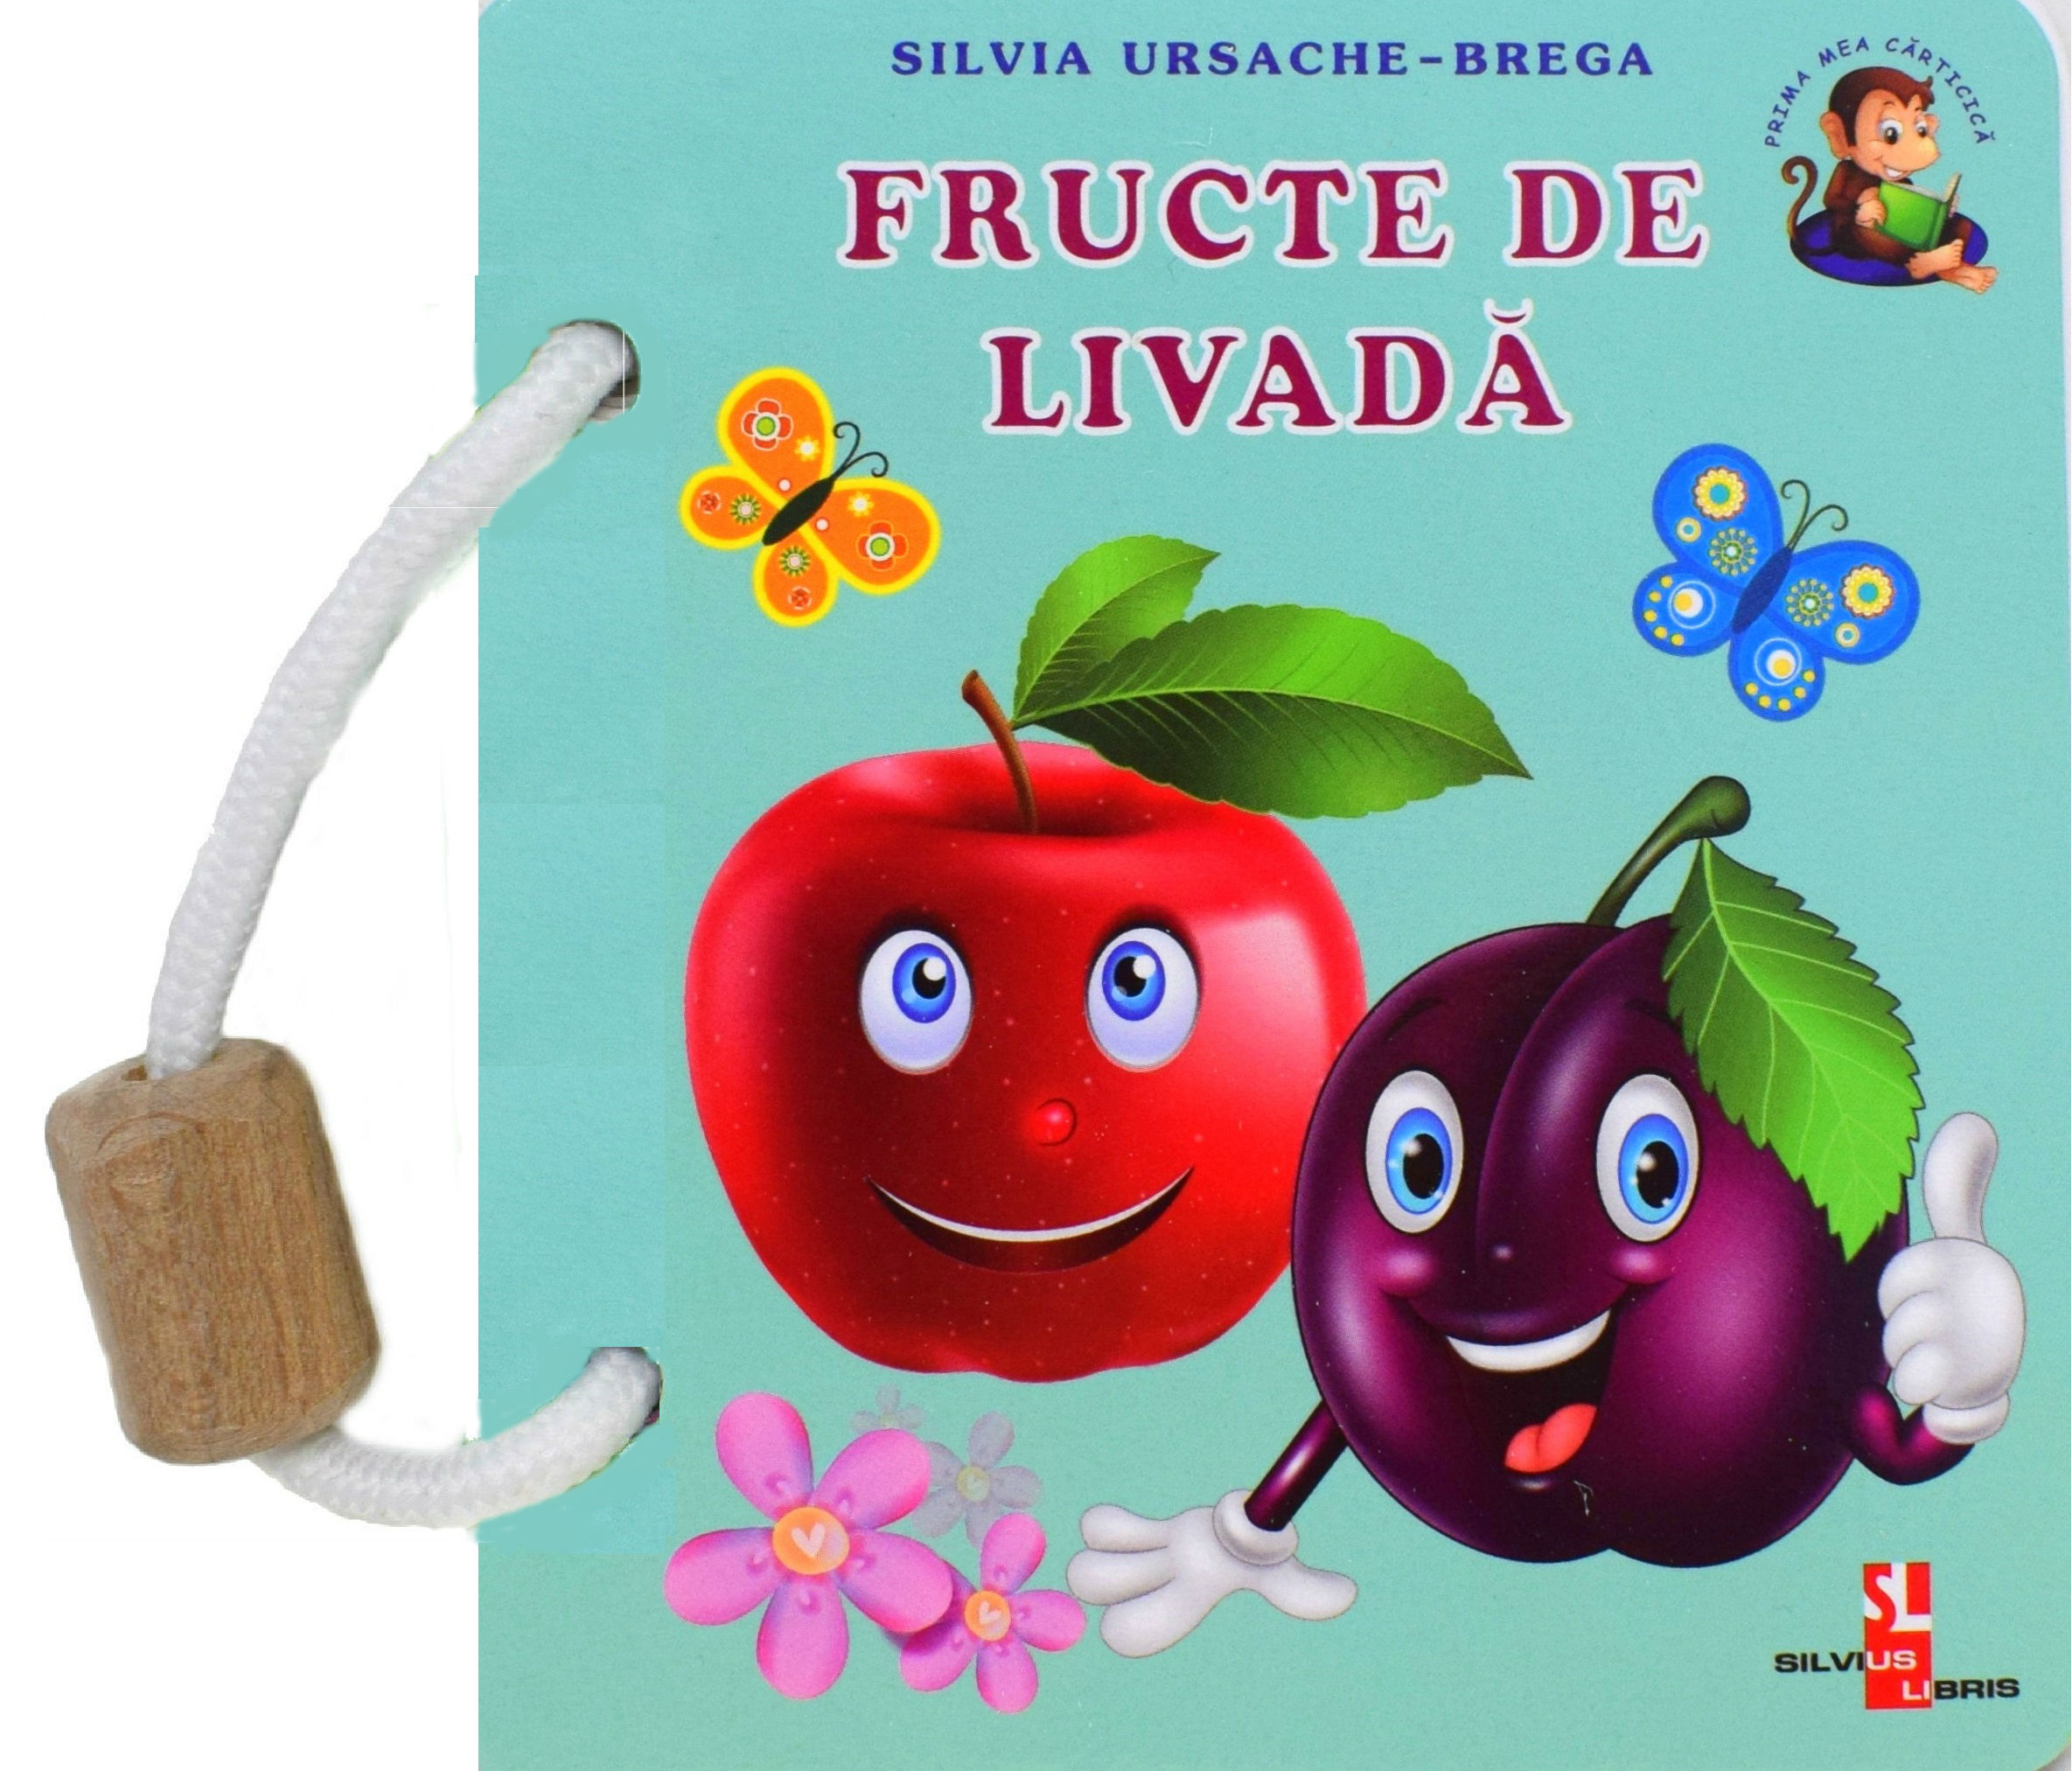 Fructe de livada - Silvia Ursache-Brega